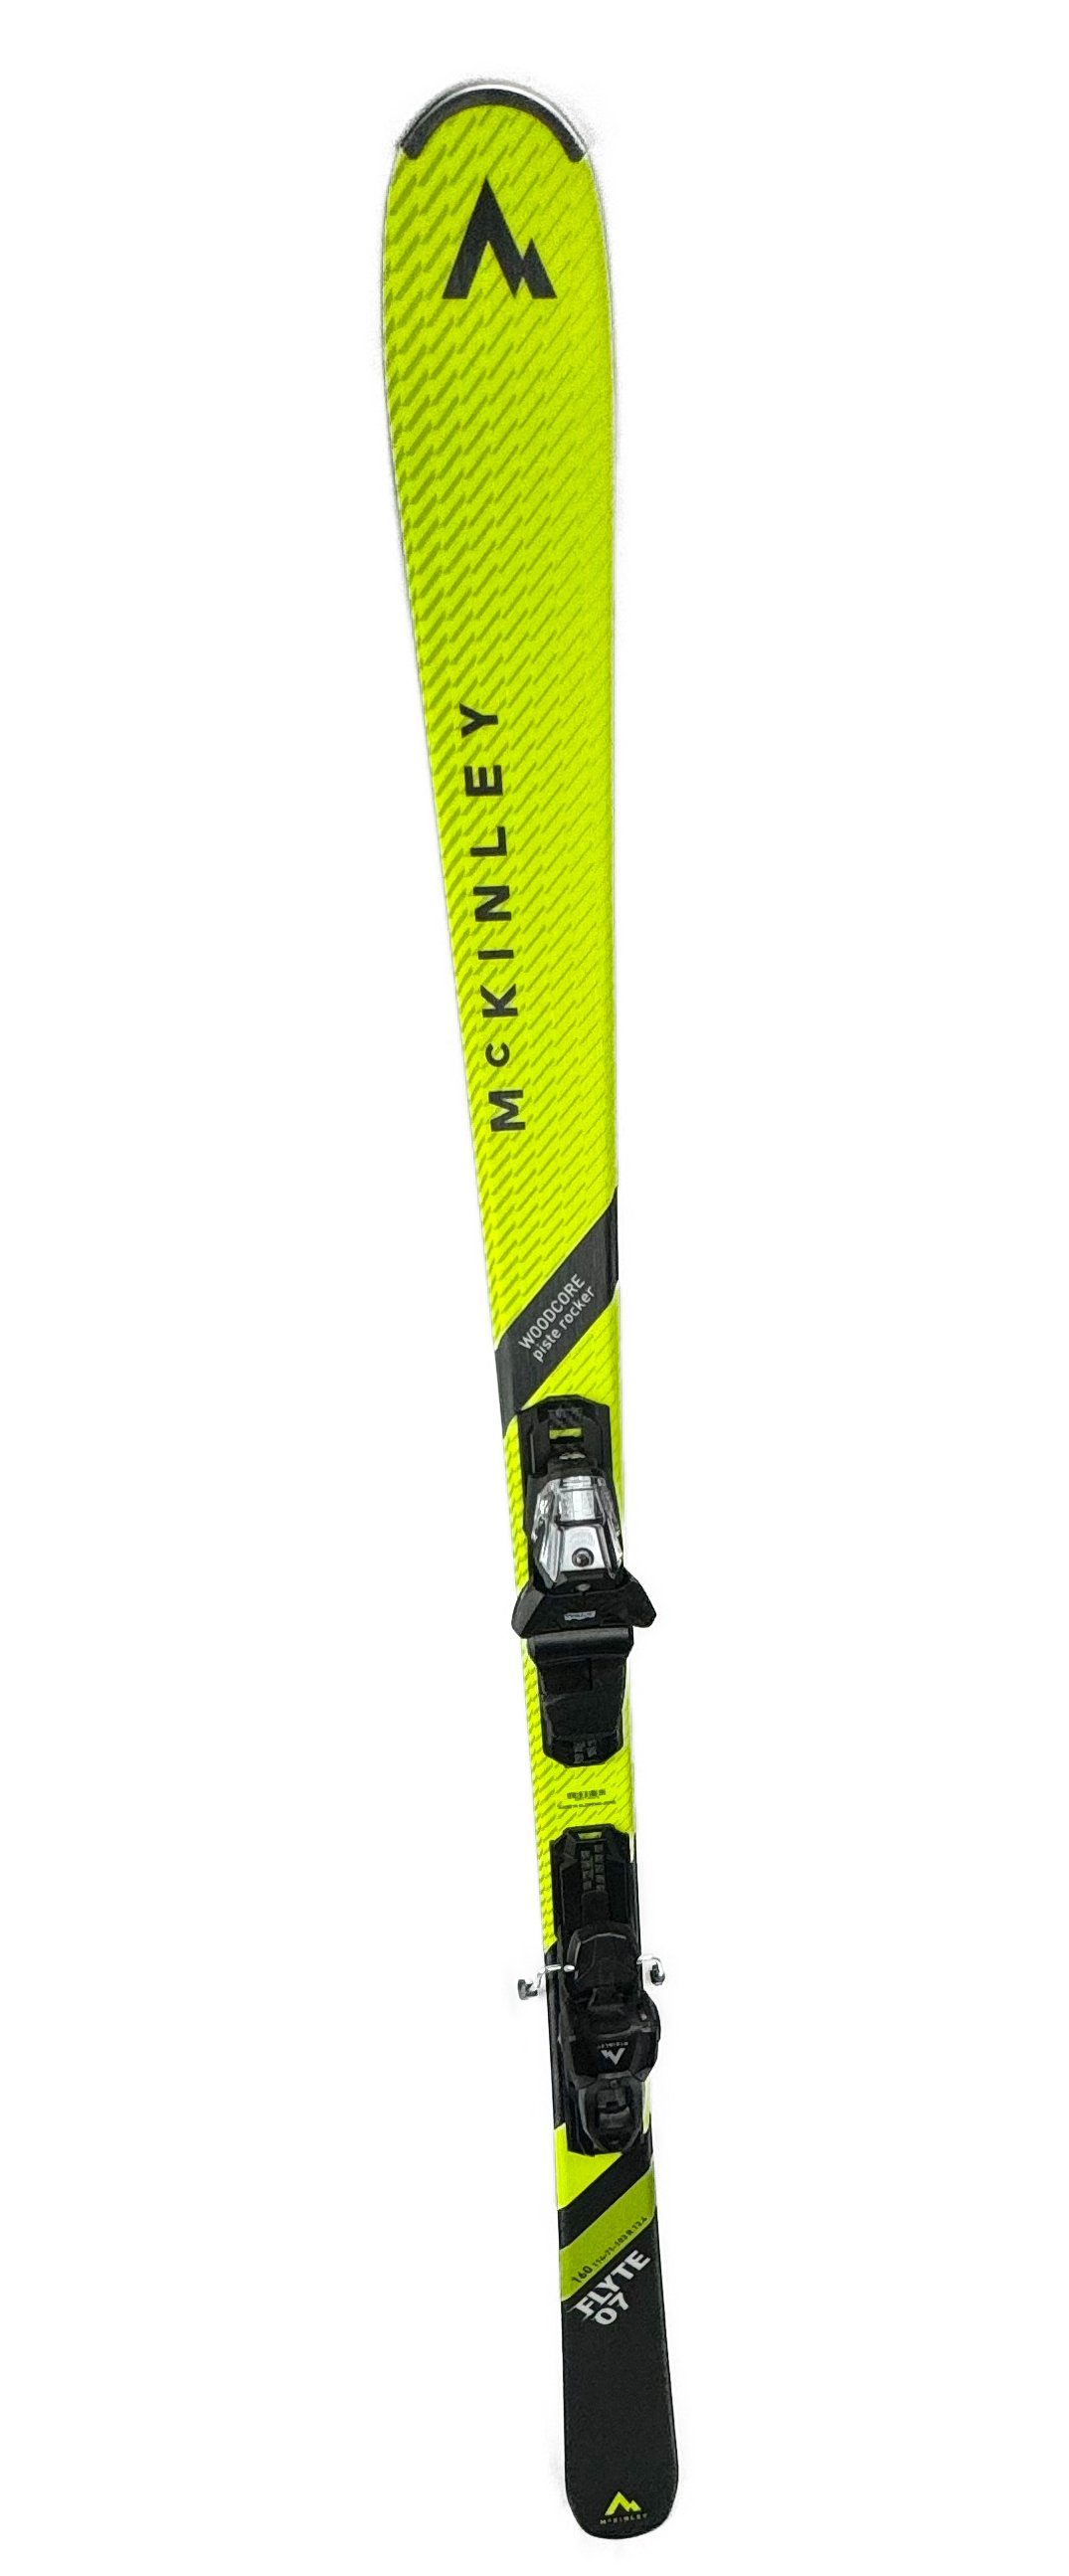 McKINLEY Allroundcarver Ux.-Ski-Set Flyte 7 WHITE/COOL GREY-BLACK-HYPER PI | Skier